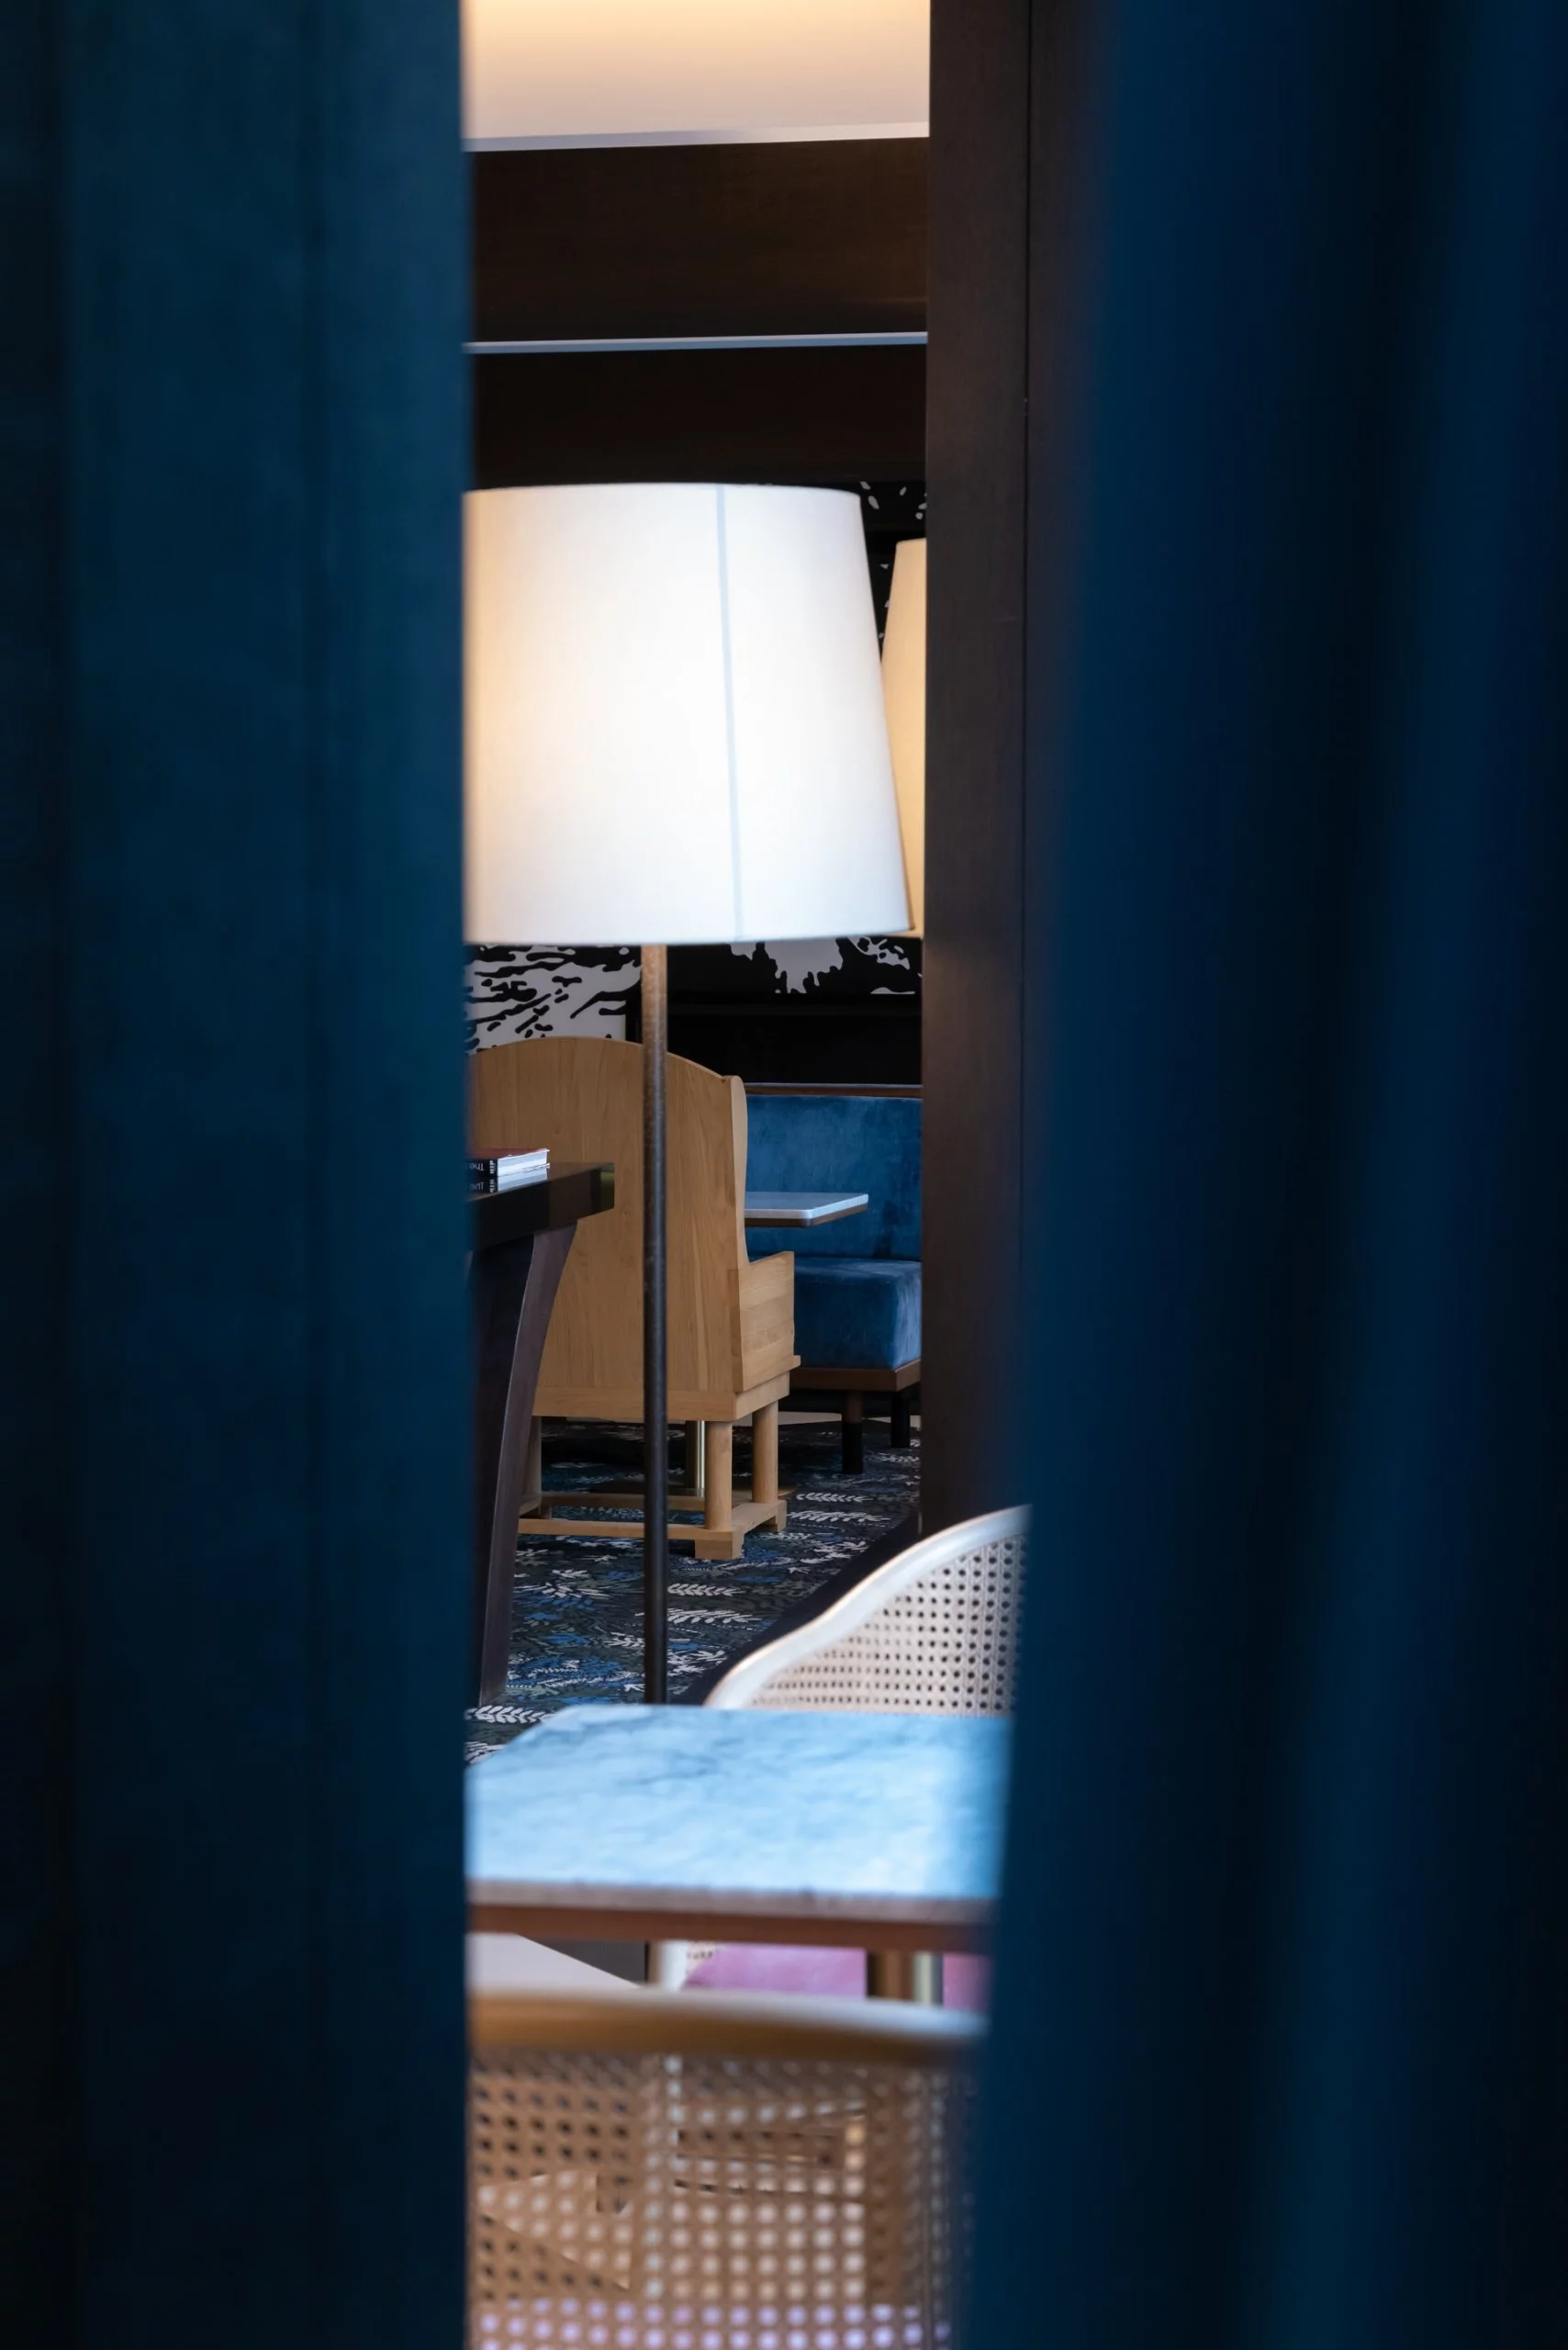 The Chess Hotel, France, Paris, Opera